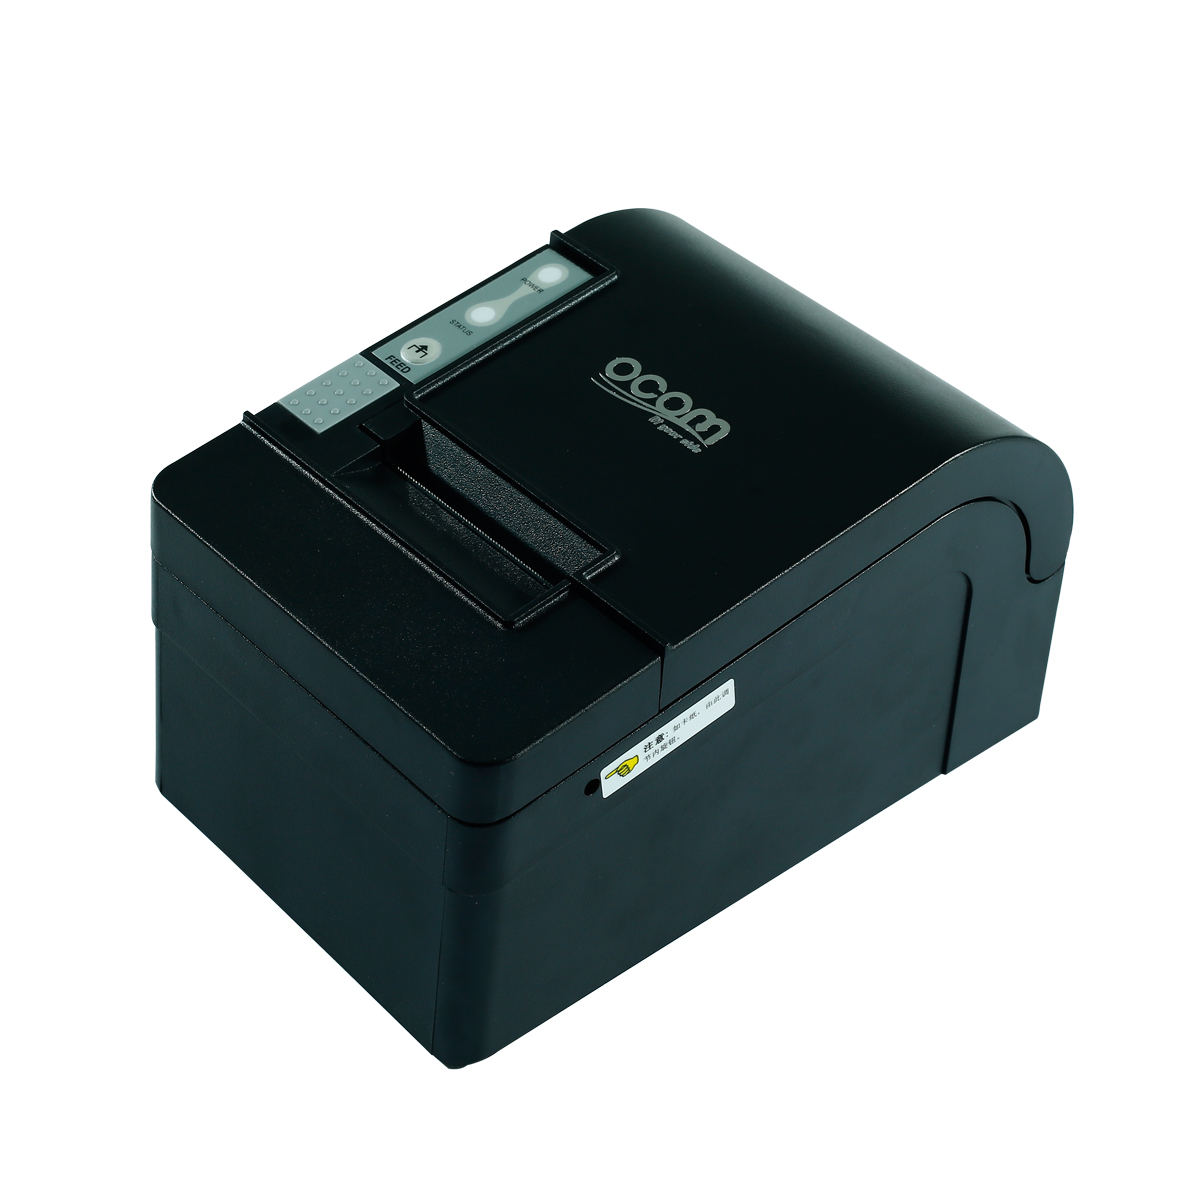 OCPP-58C-U 58mm thermal receipt printer with auto cutter